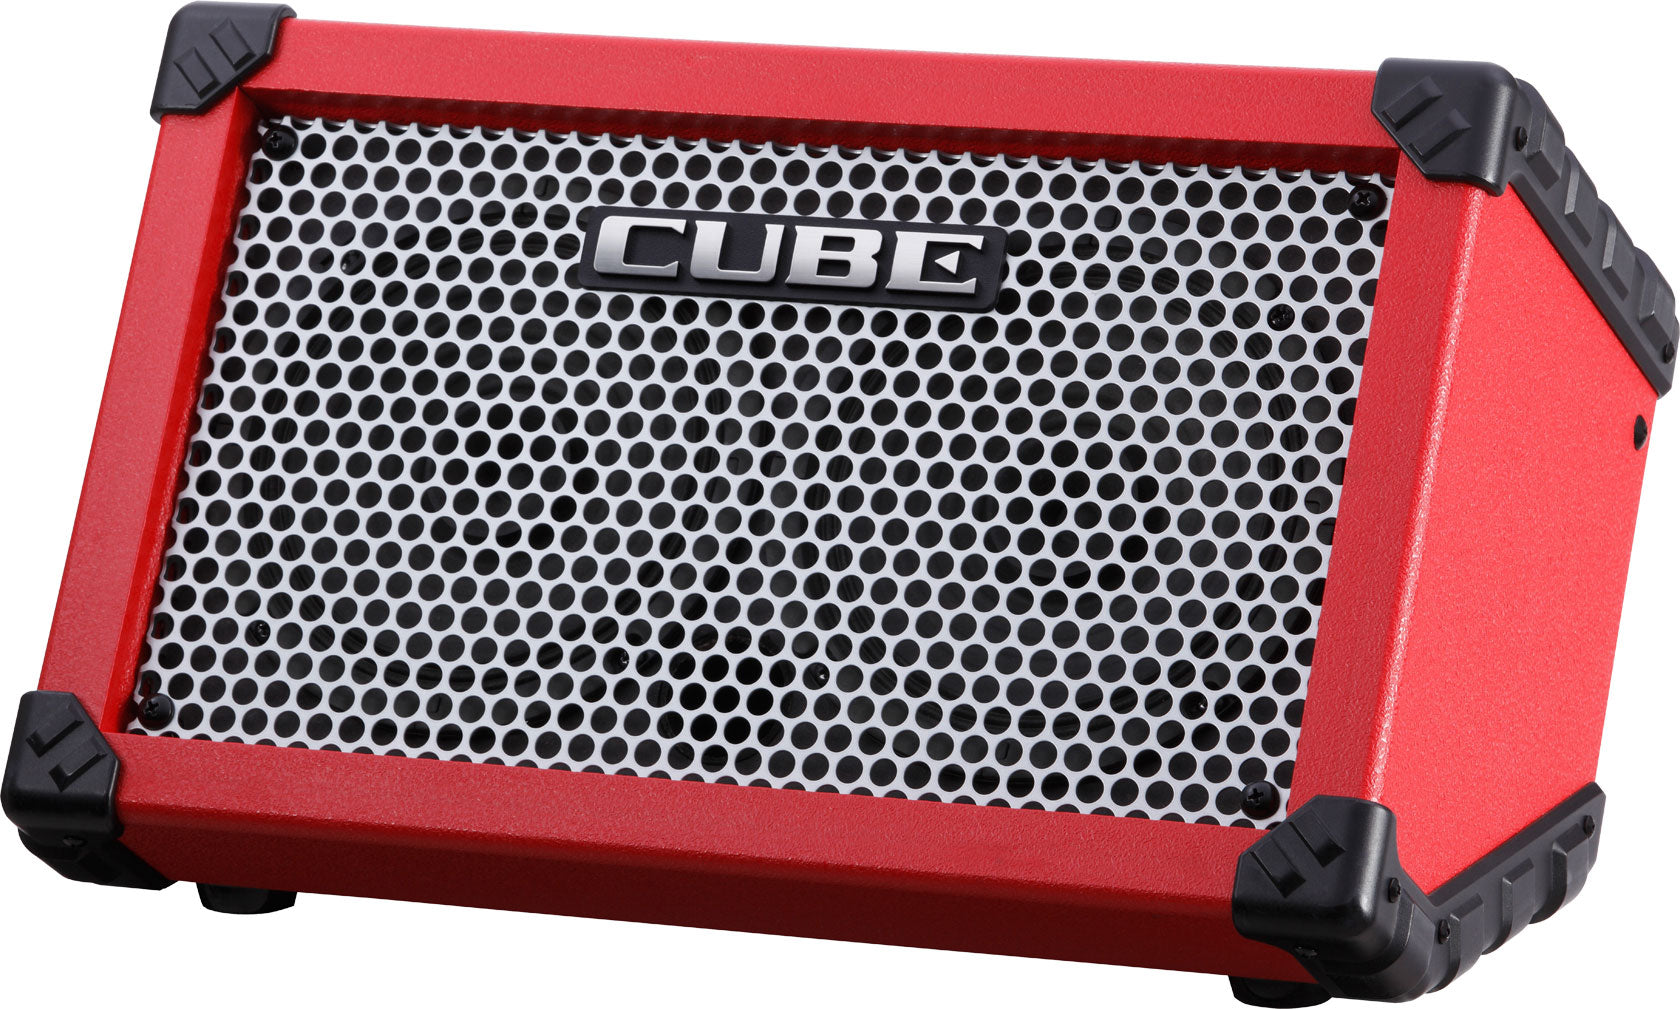 Roland CUBE Street 5-watt 2x6.5 Battery Powered Combo Amplifier - Red (CUBE-STA), ROLAND, GUITAR AMPLIFIER, roland-guitar-amplifier-cube-st-ra, ZOSO MUSIC SDN BHD